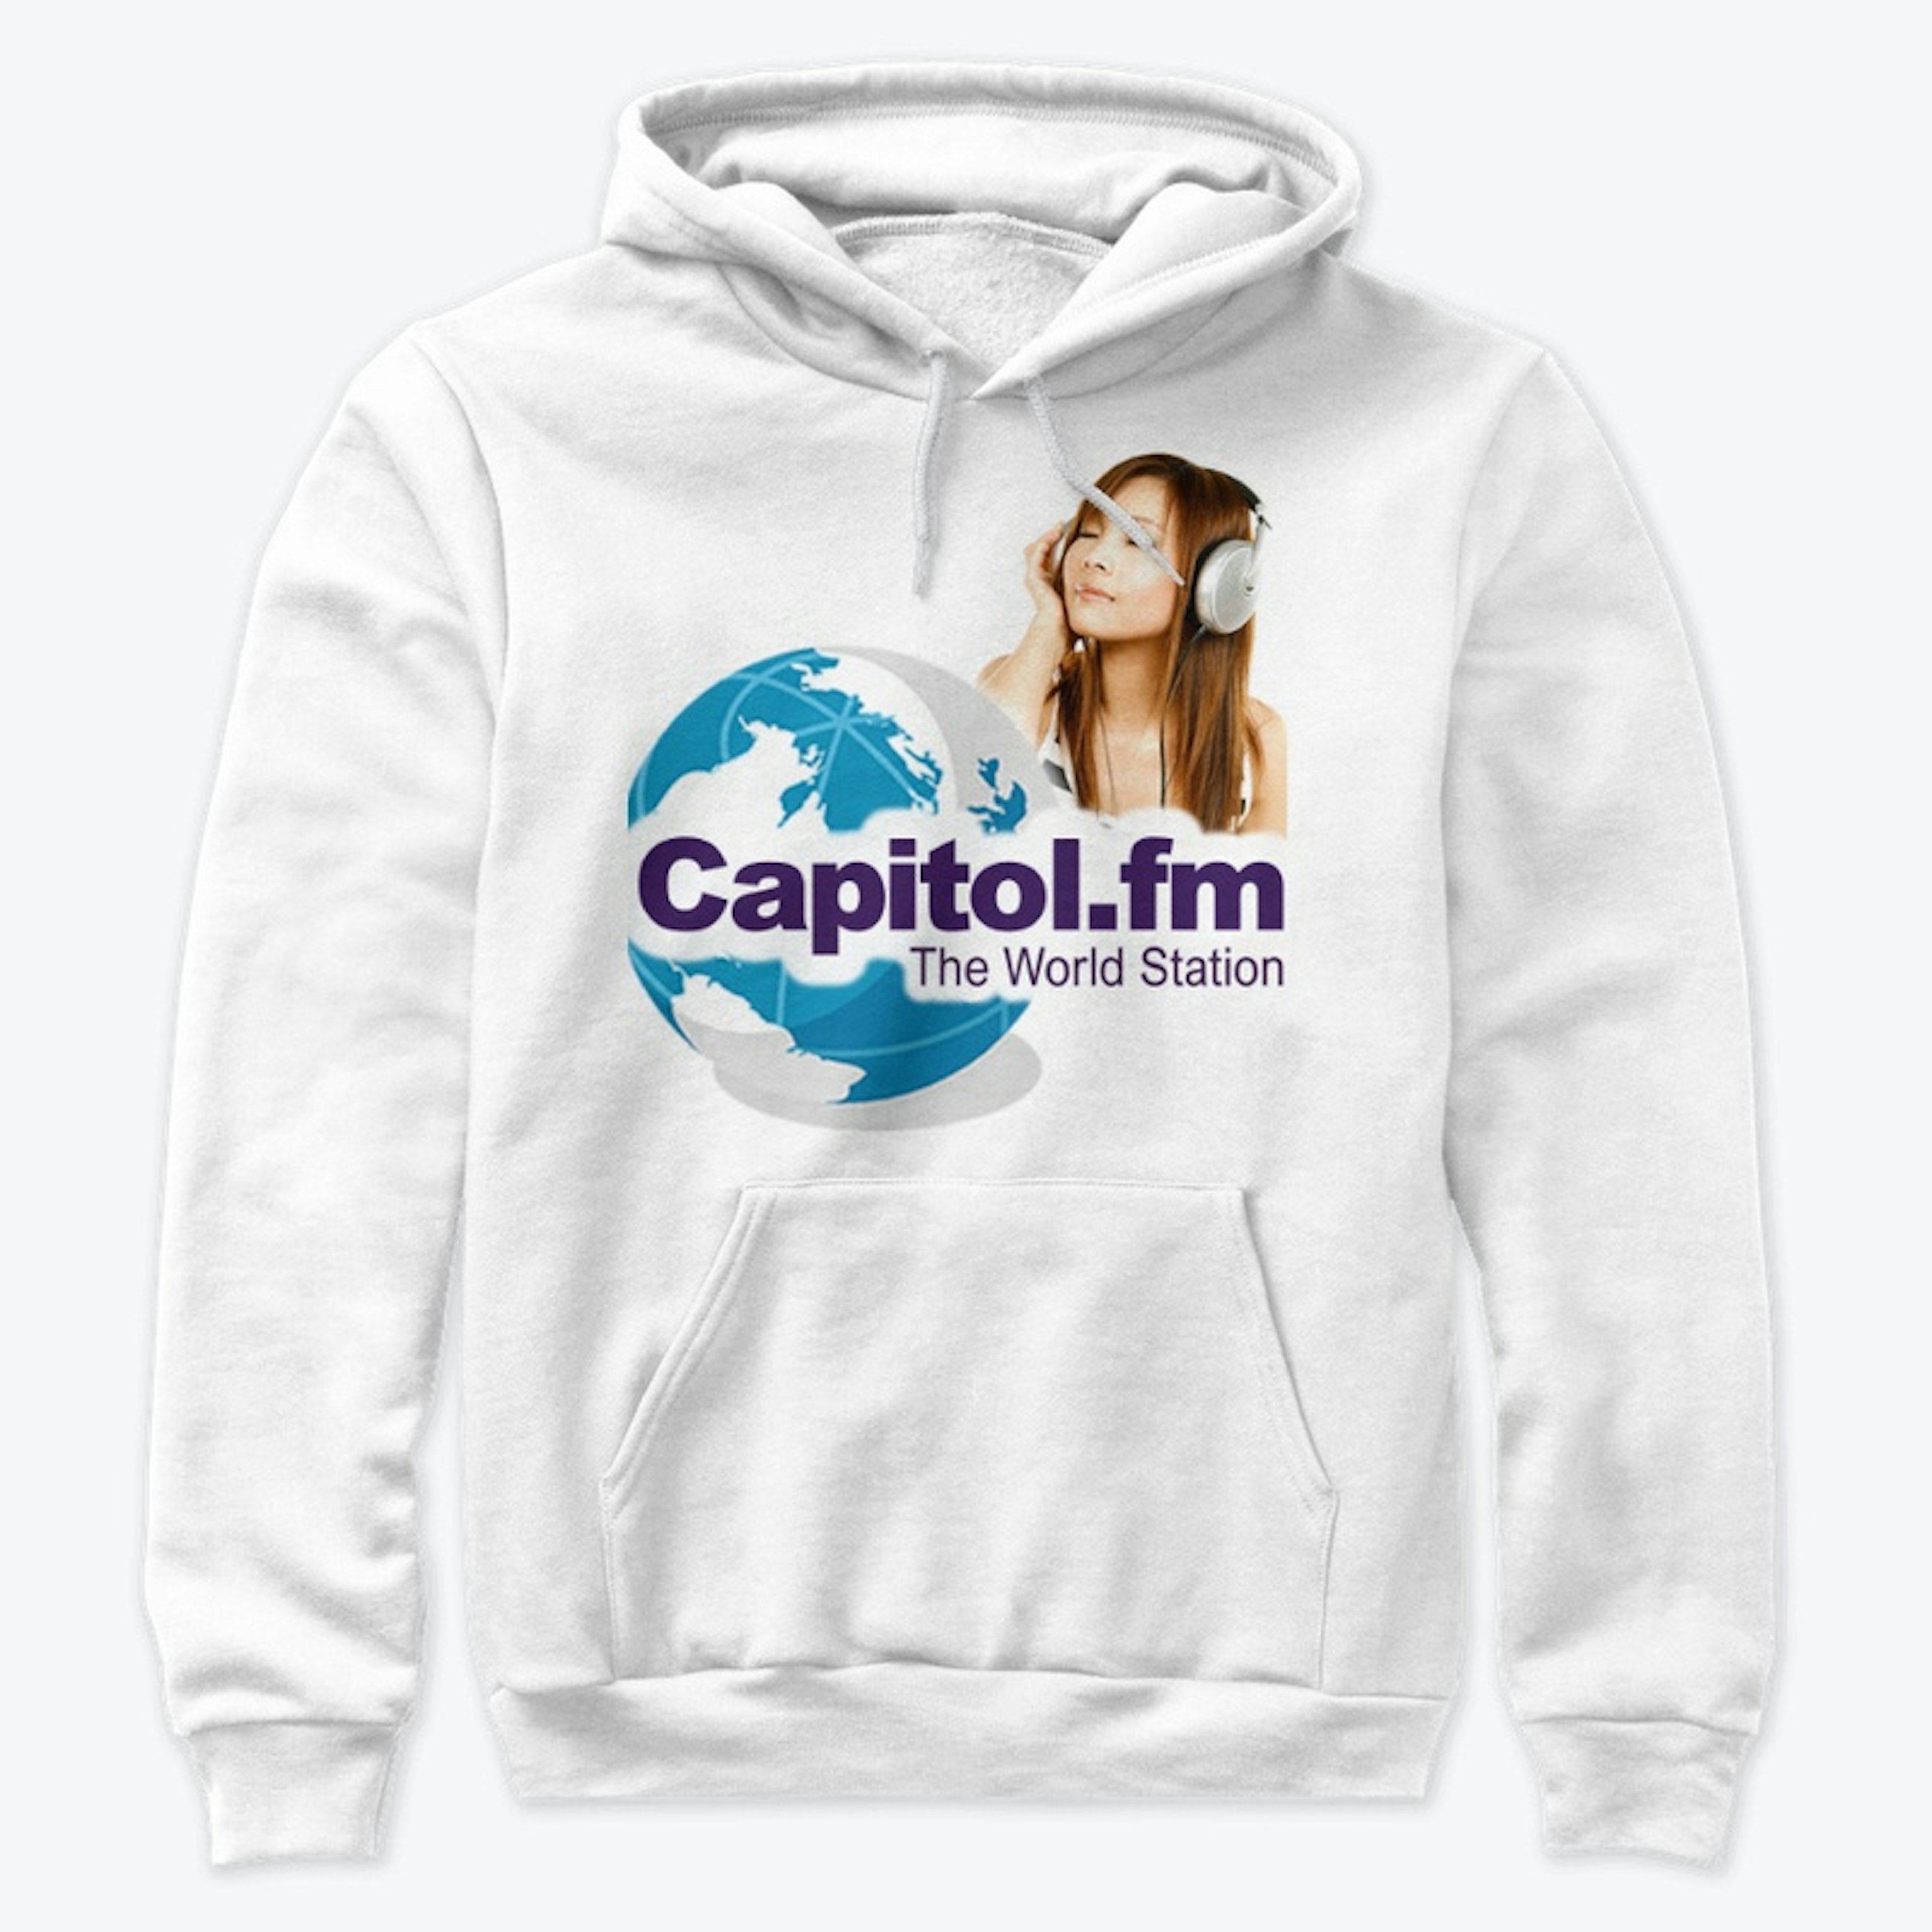 Capitol.fm Goodtime Collection